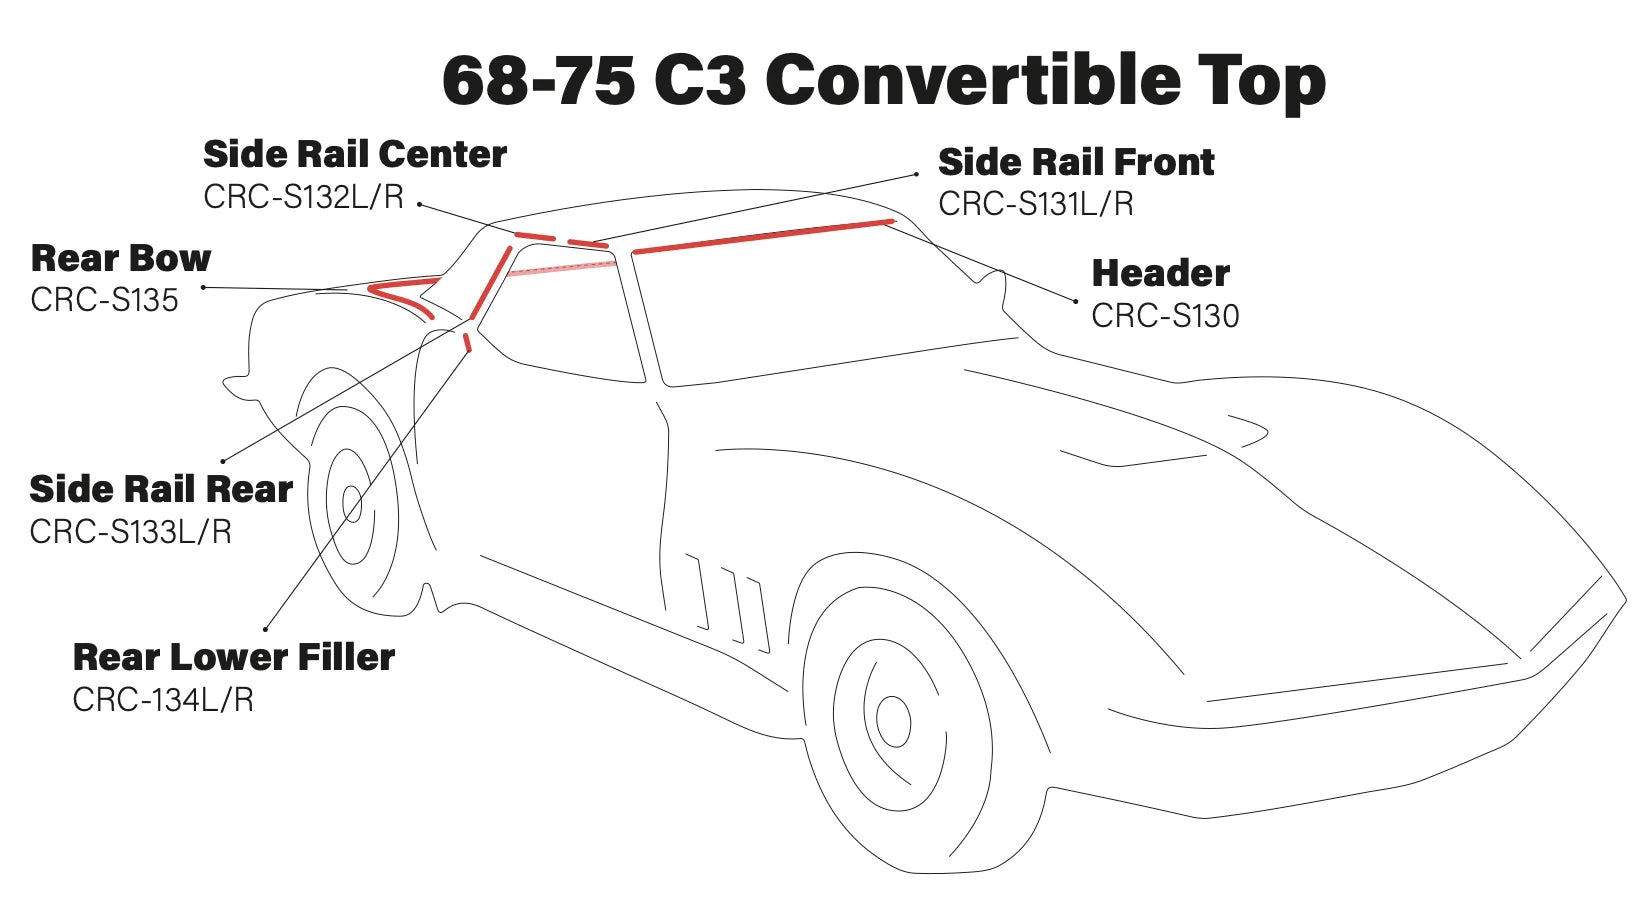 C3: 68-75 Convertible Top